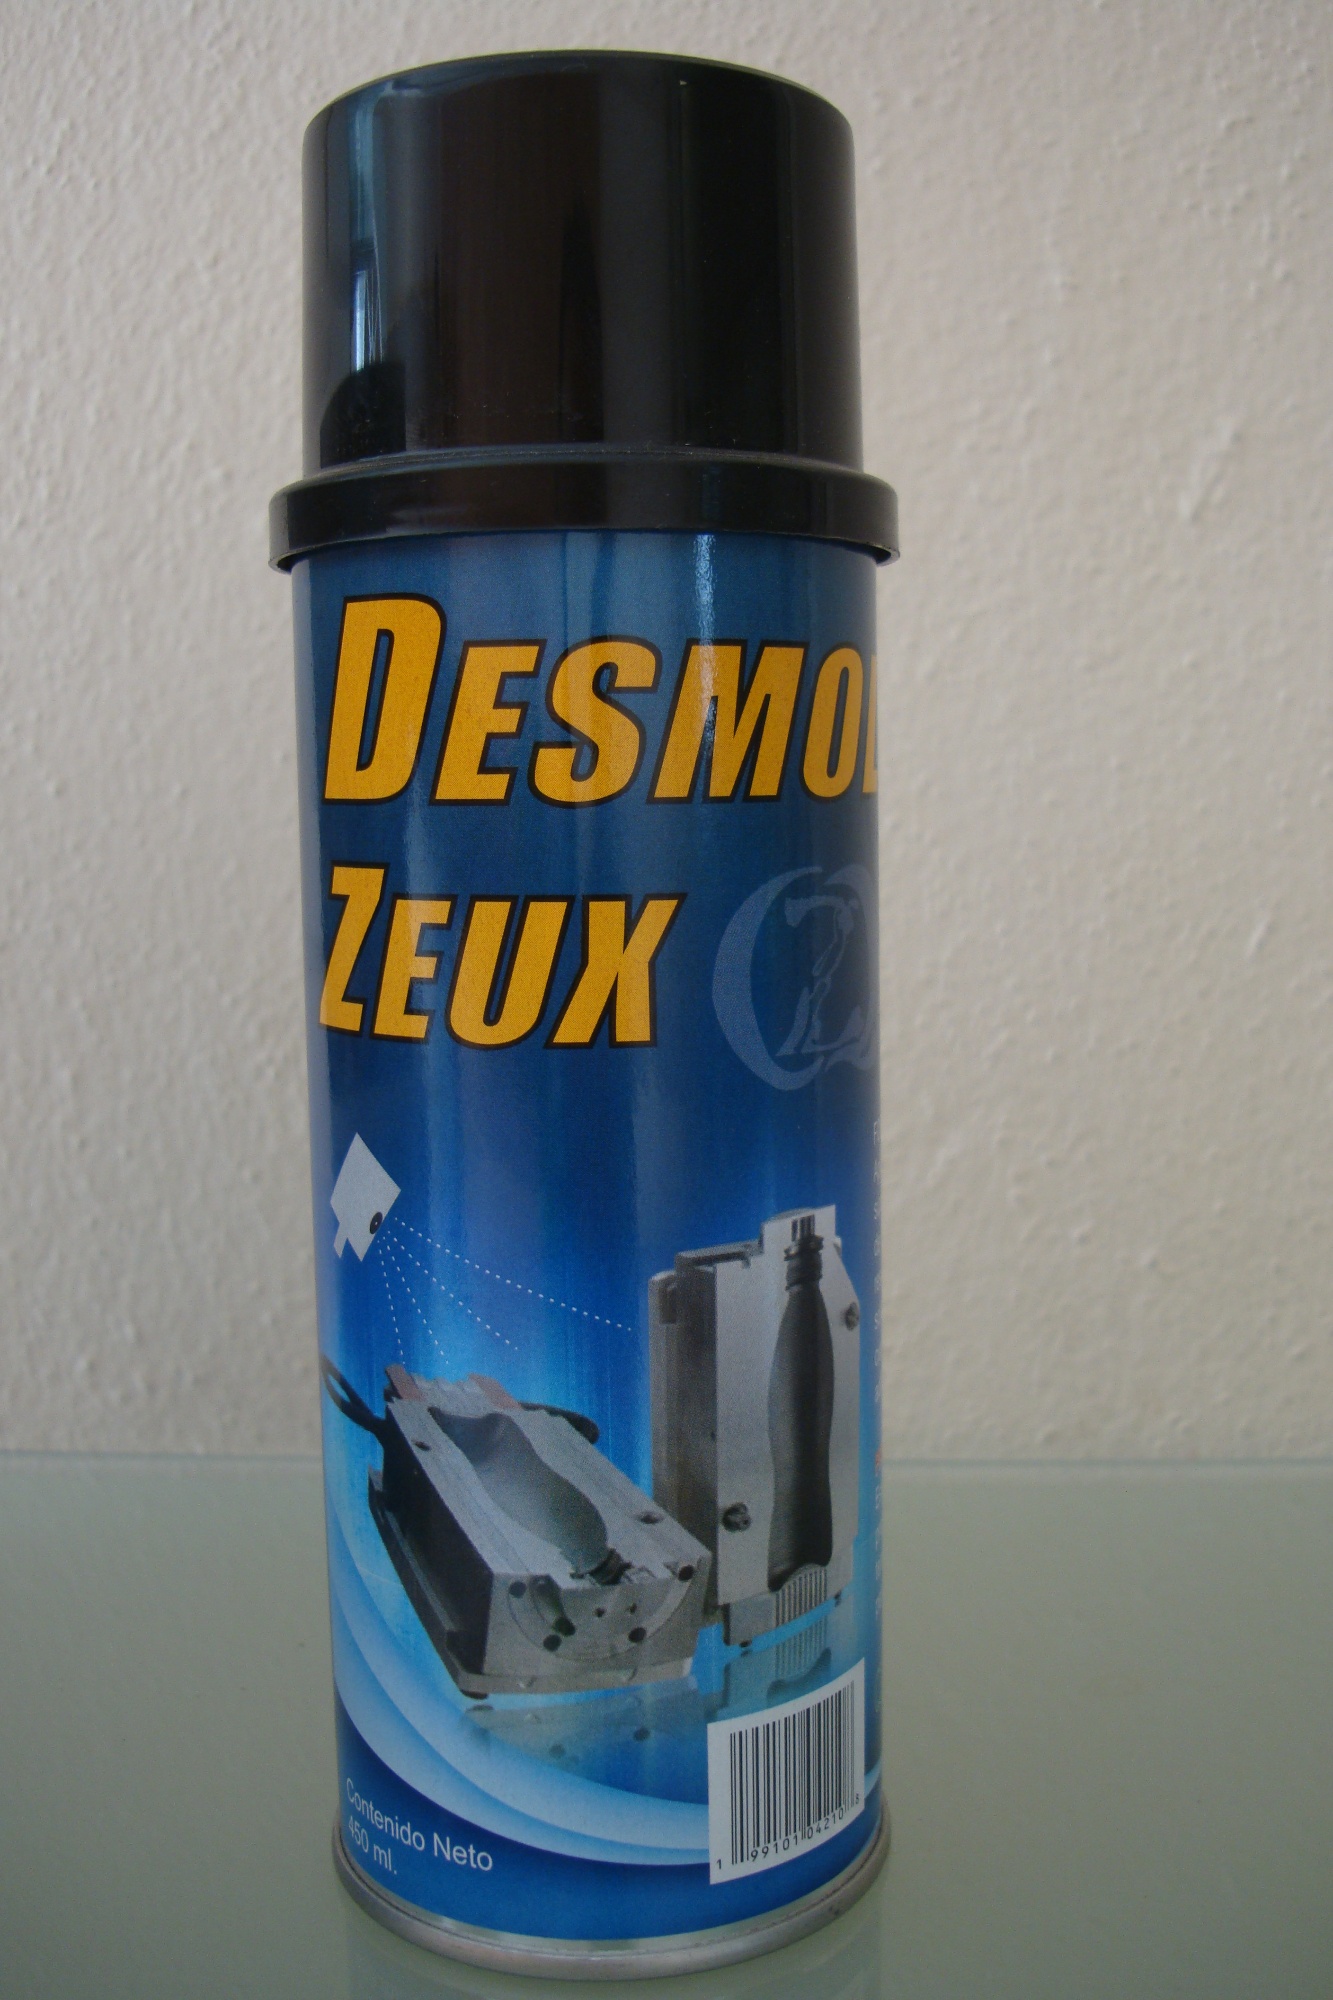 DESMOL-ZEUX